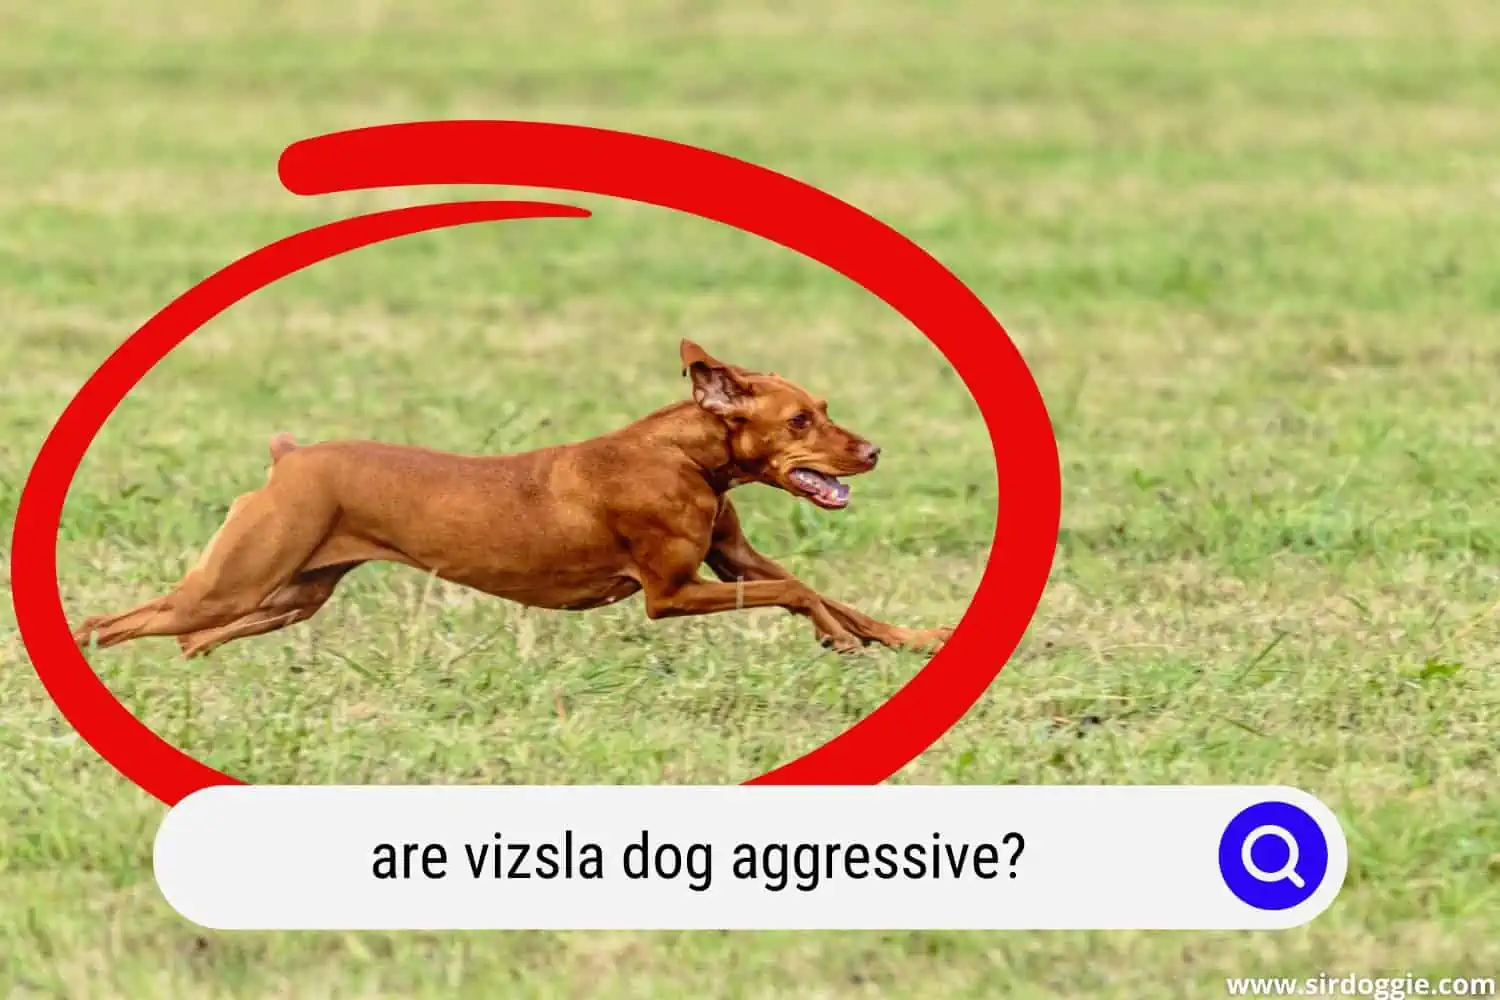 An aggressive Vizsla dog running in the field